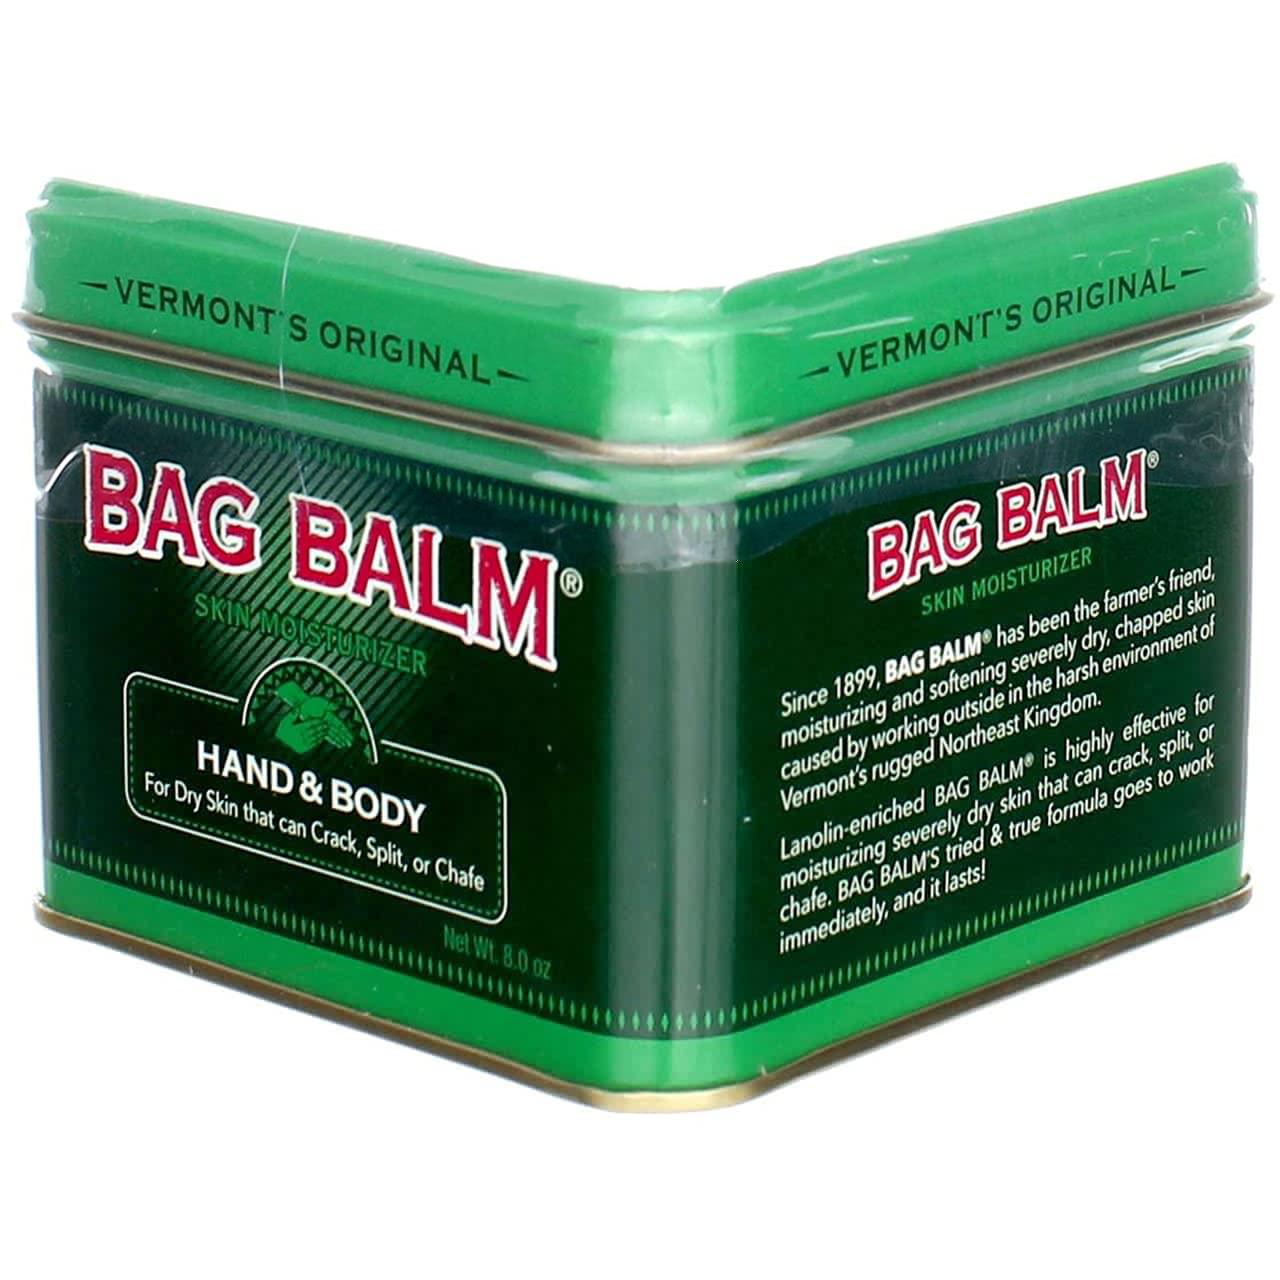 BAG BALM 8 OZ (Pack of 3)